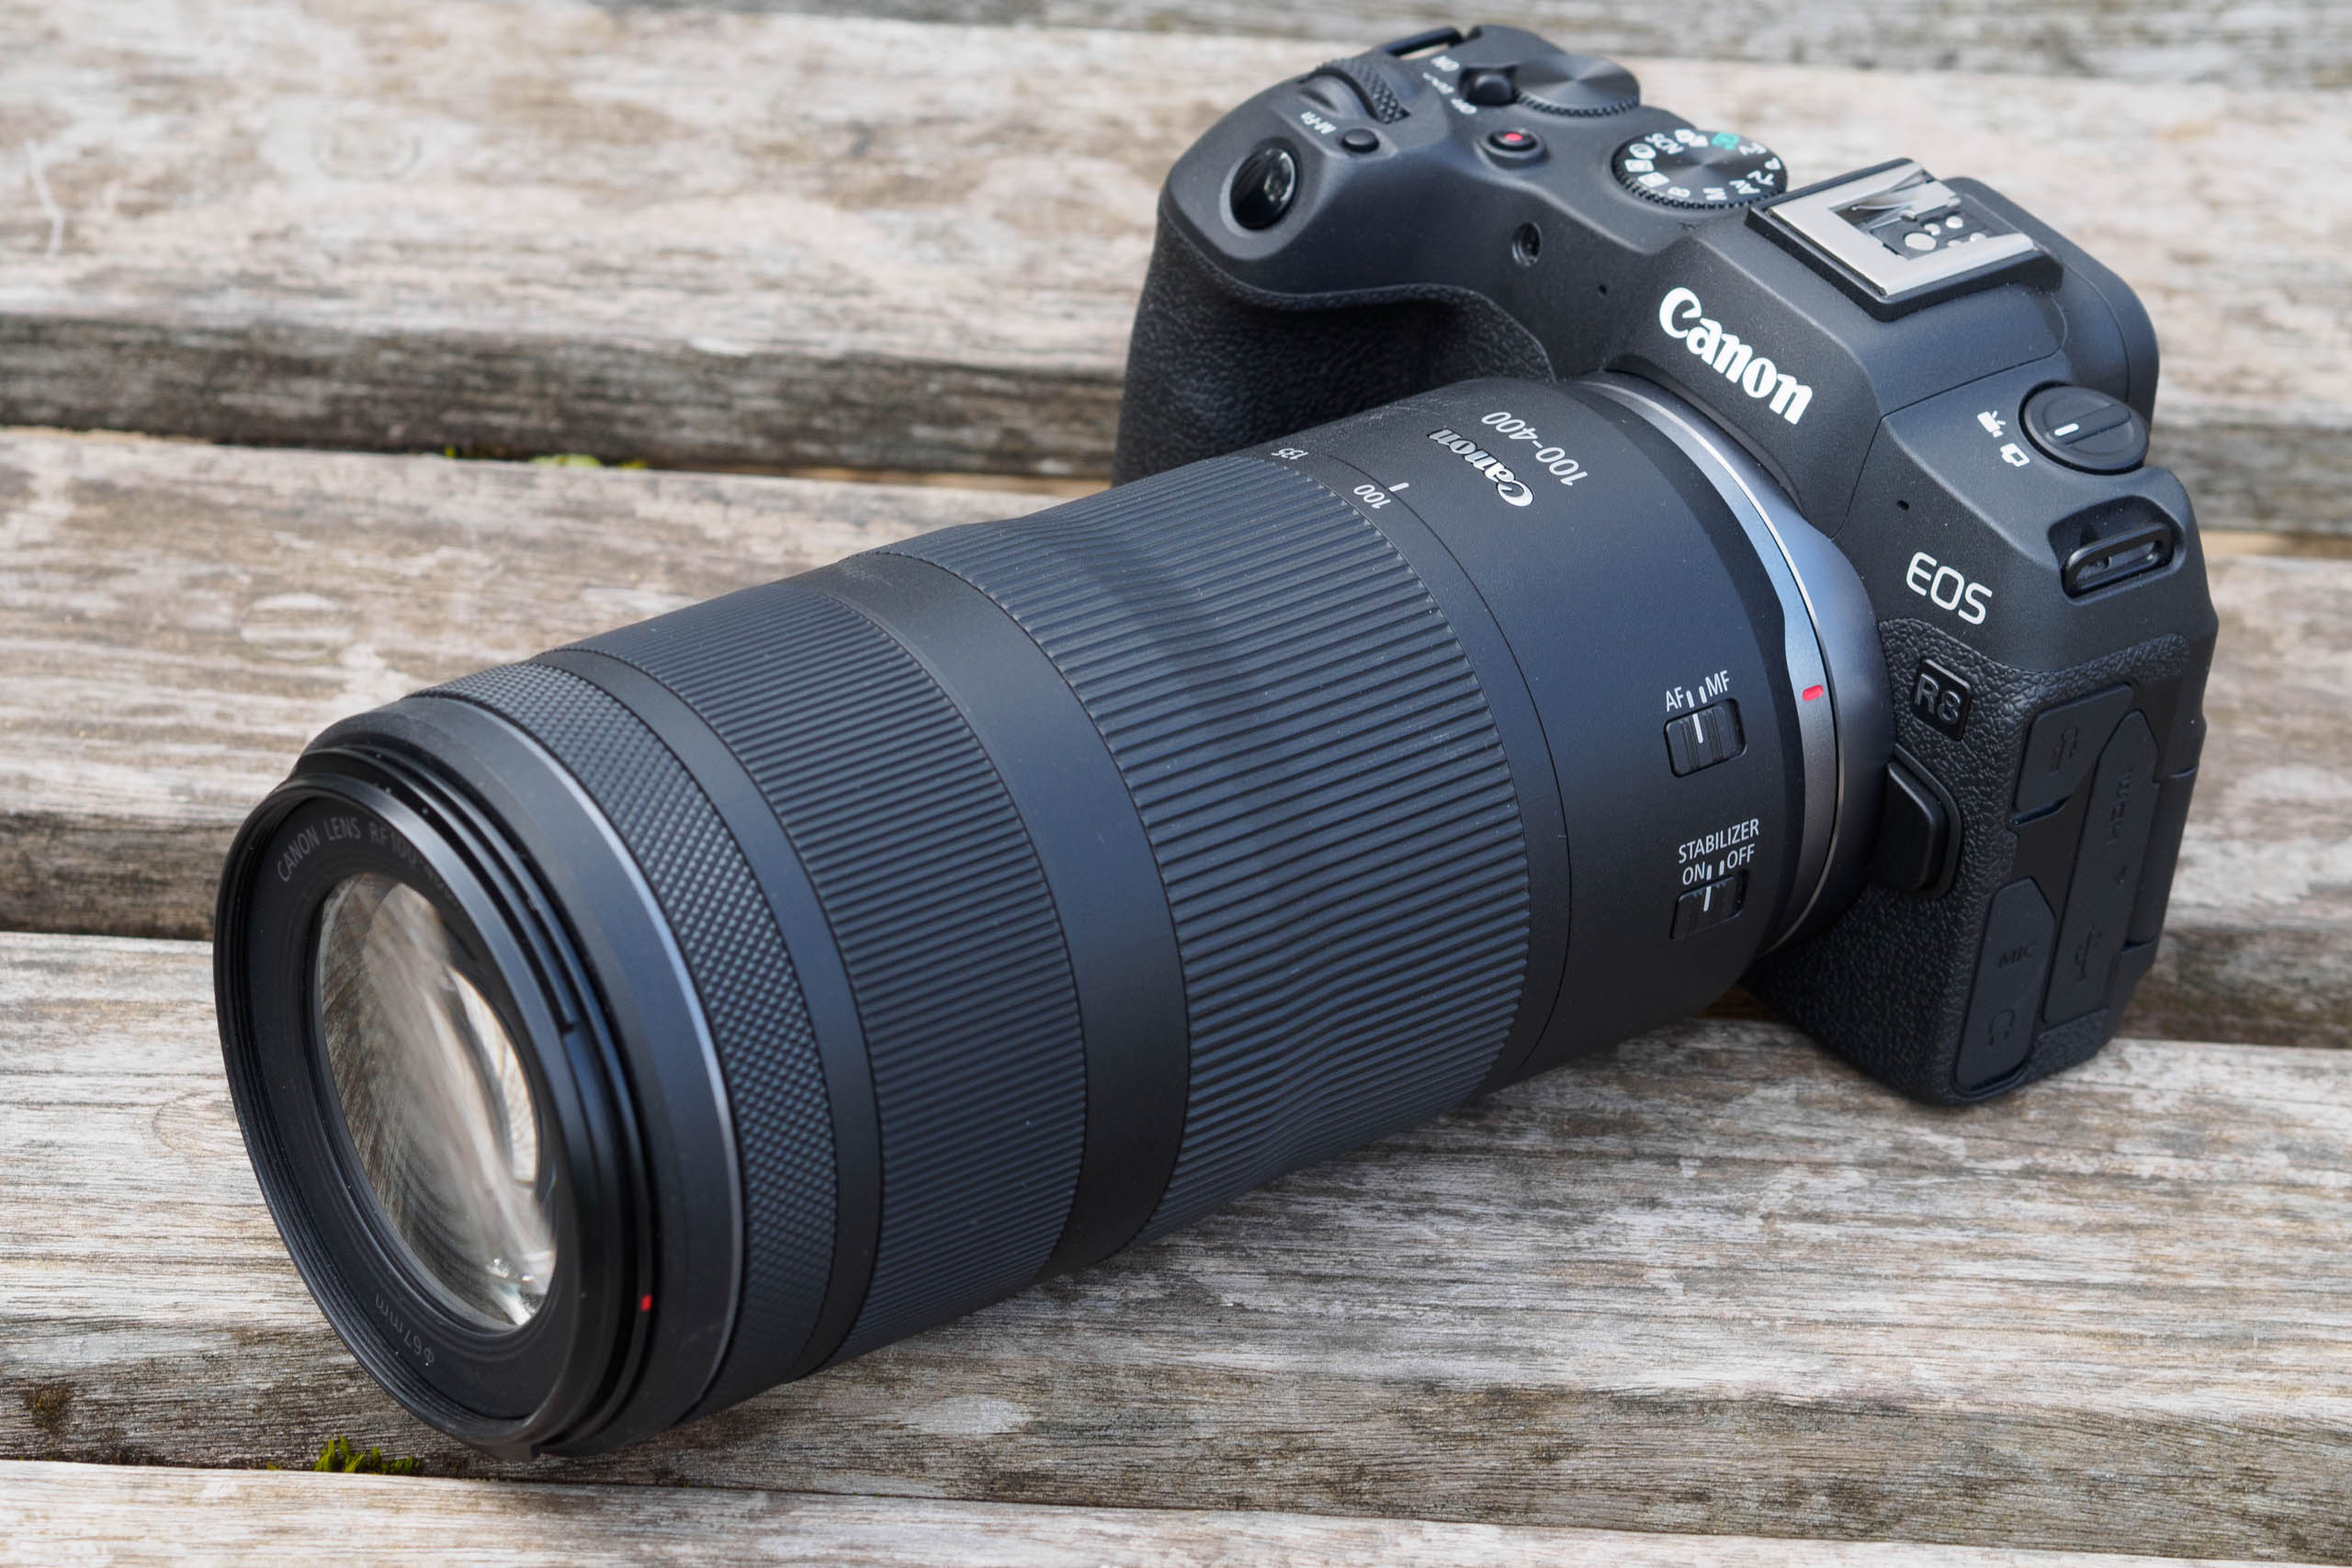 Canon EF 50mm f/1.8 STM Lens + Speedlite EL-100 Creative Photography Kit